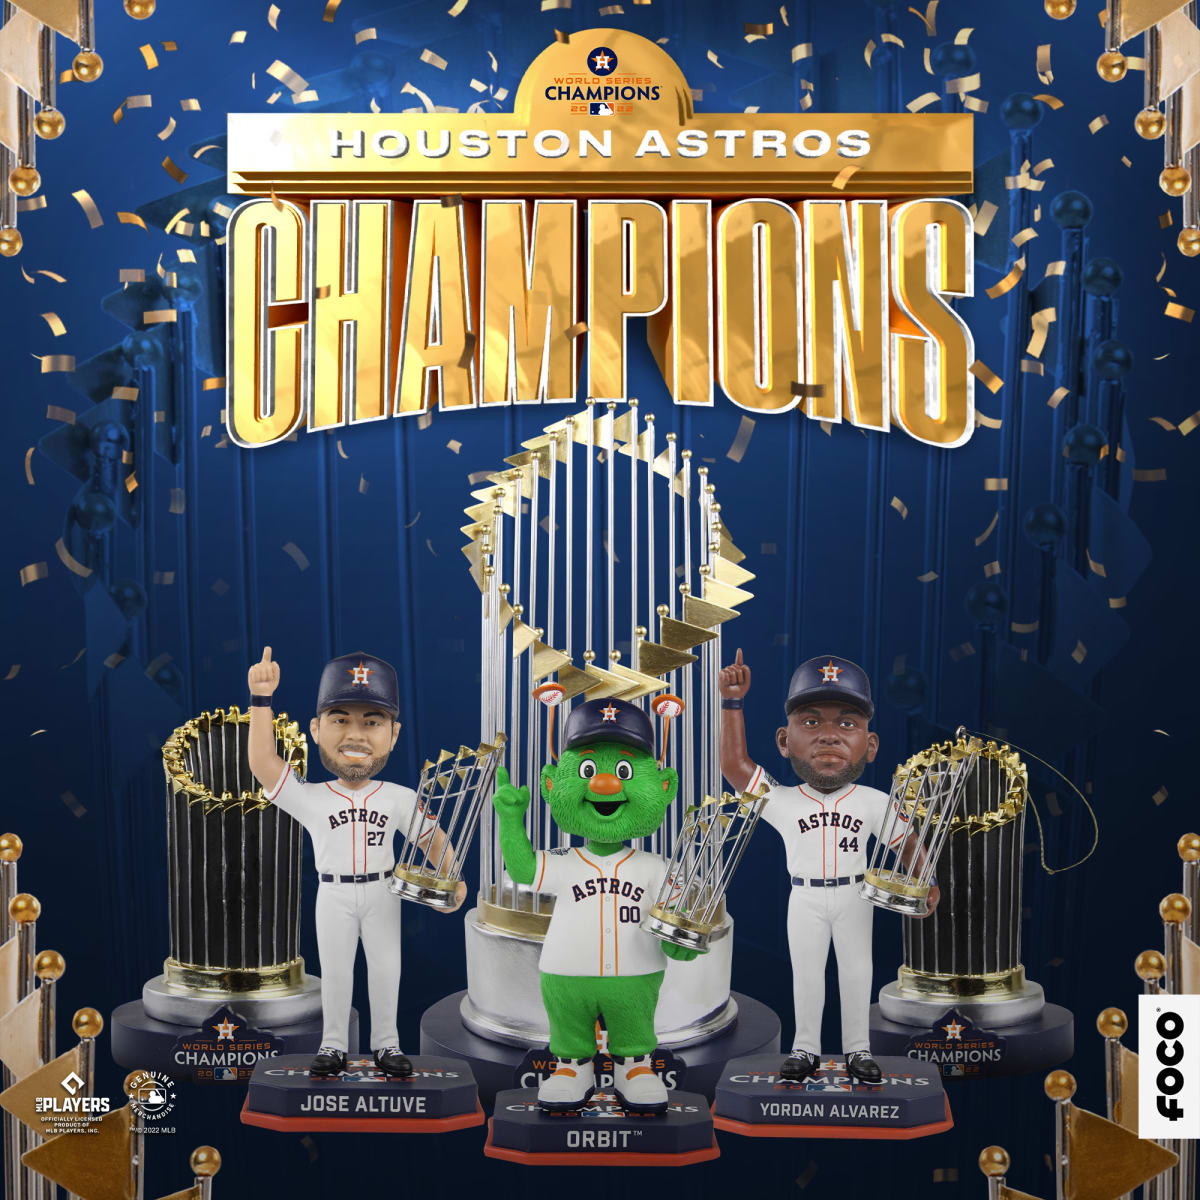 Houston Astros receive their spectacular World Series championship